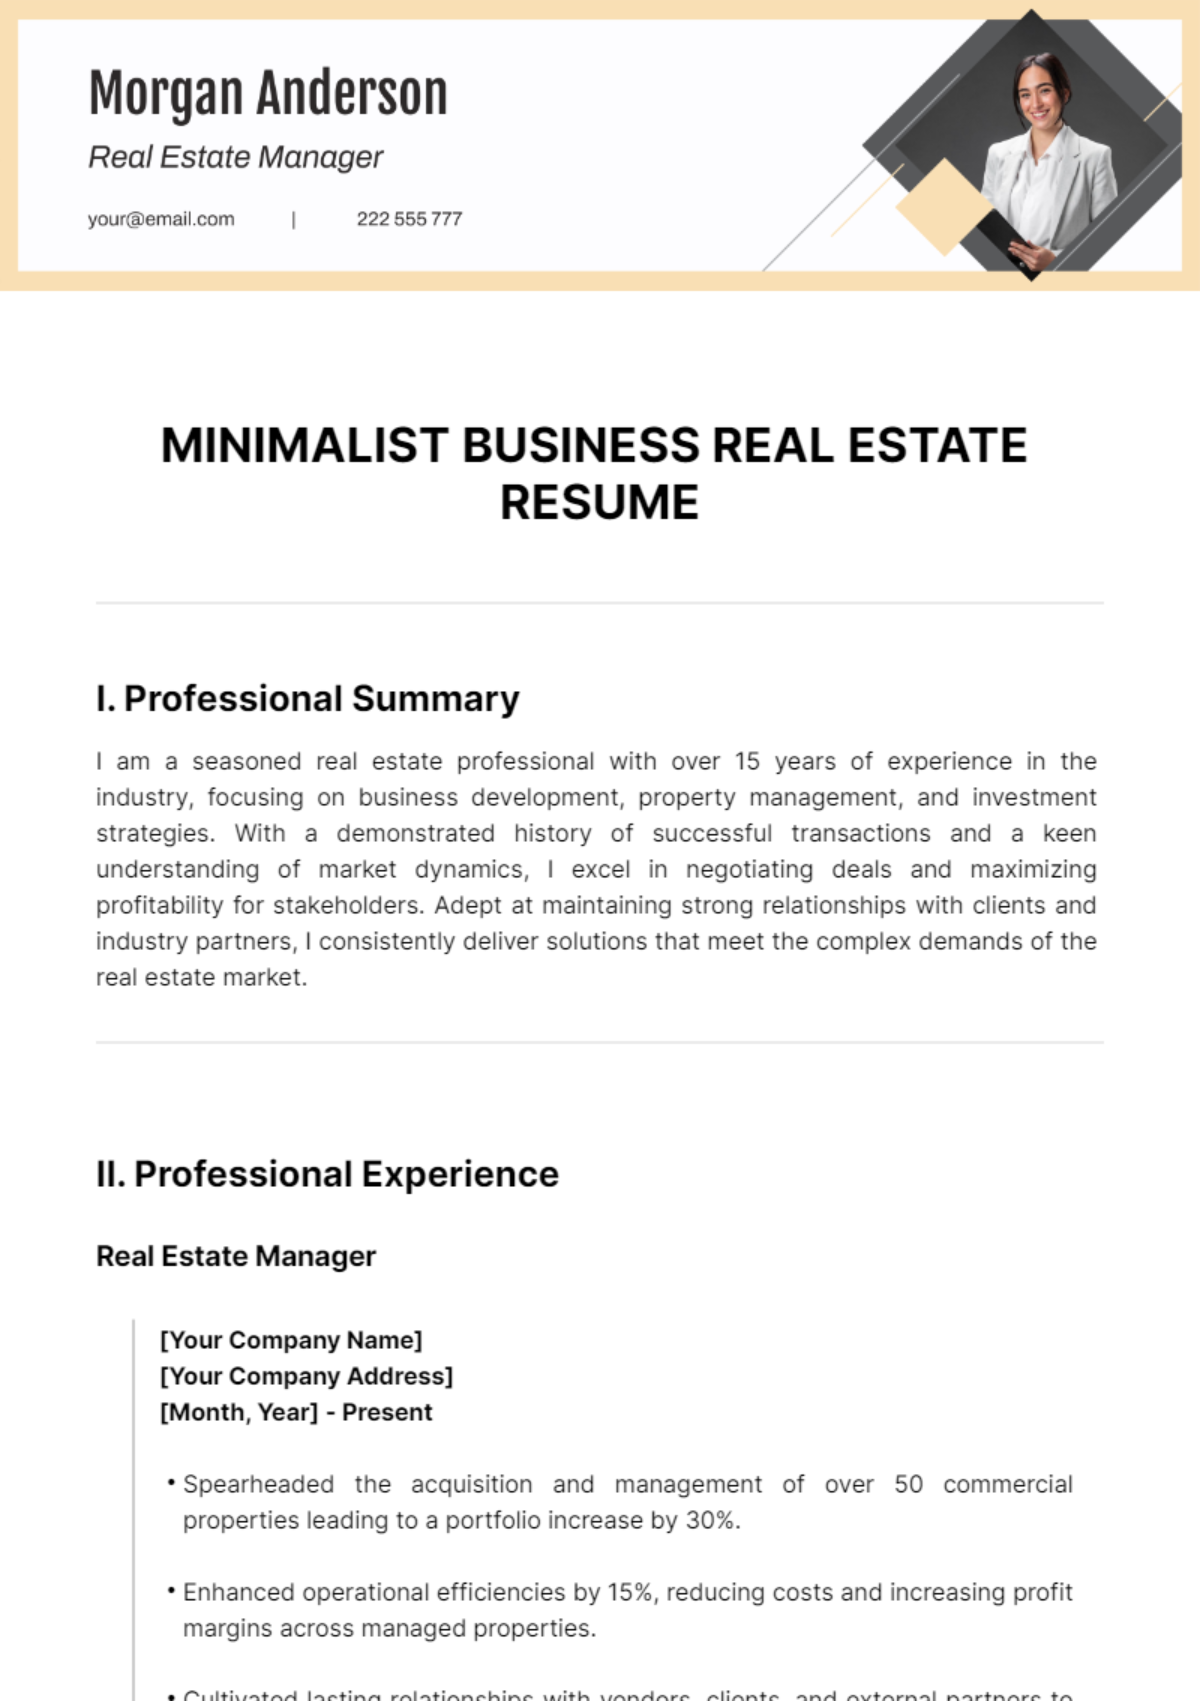 Minimalist Business Real Estate Resume Template